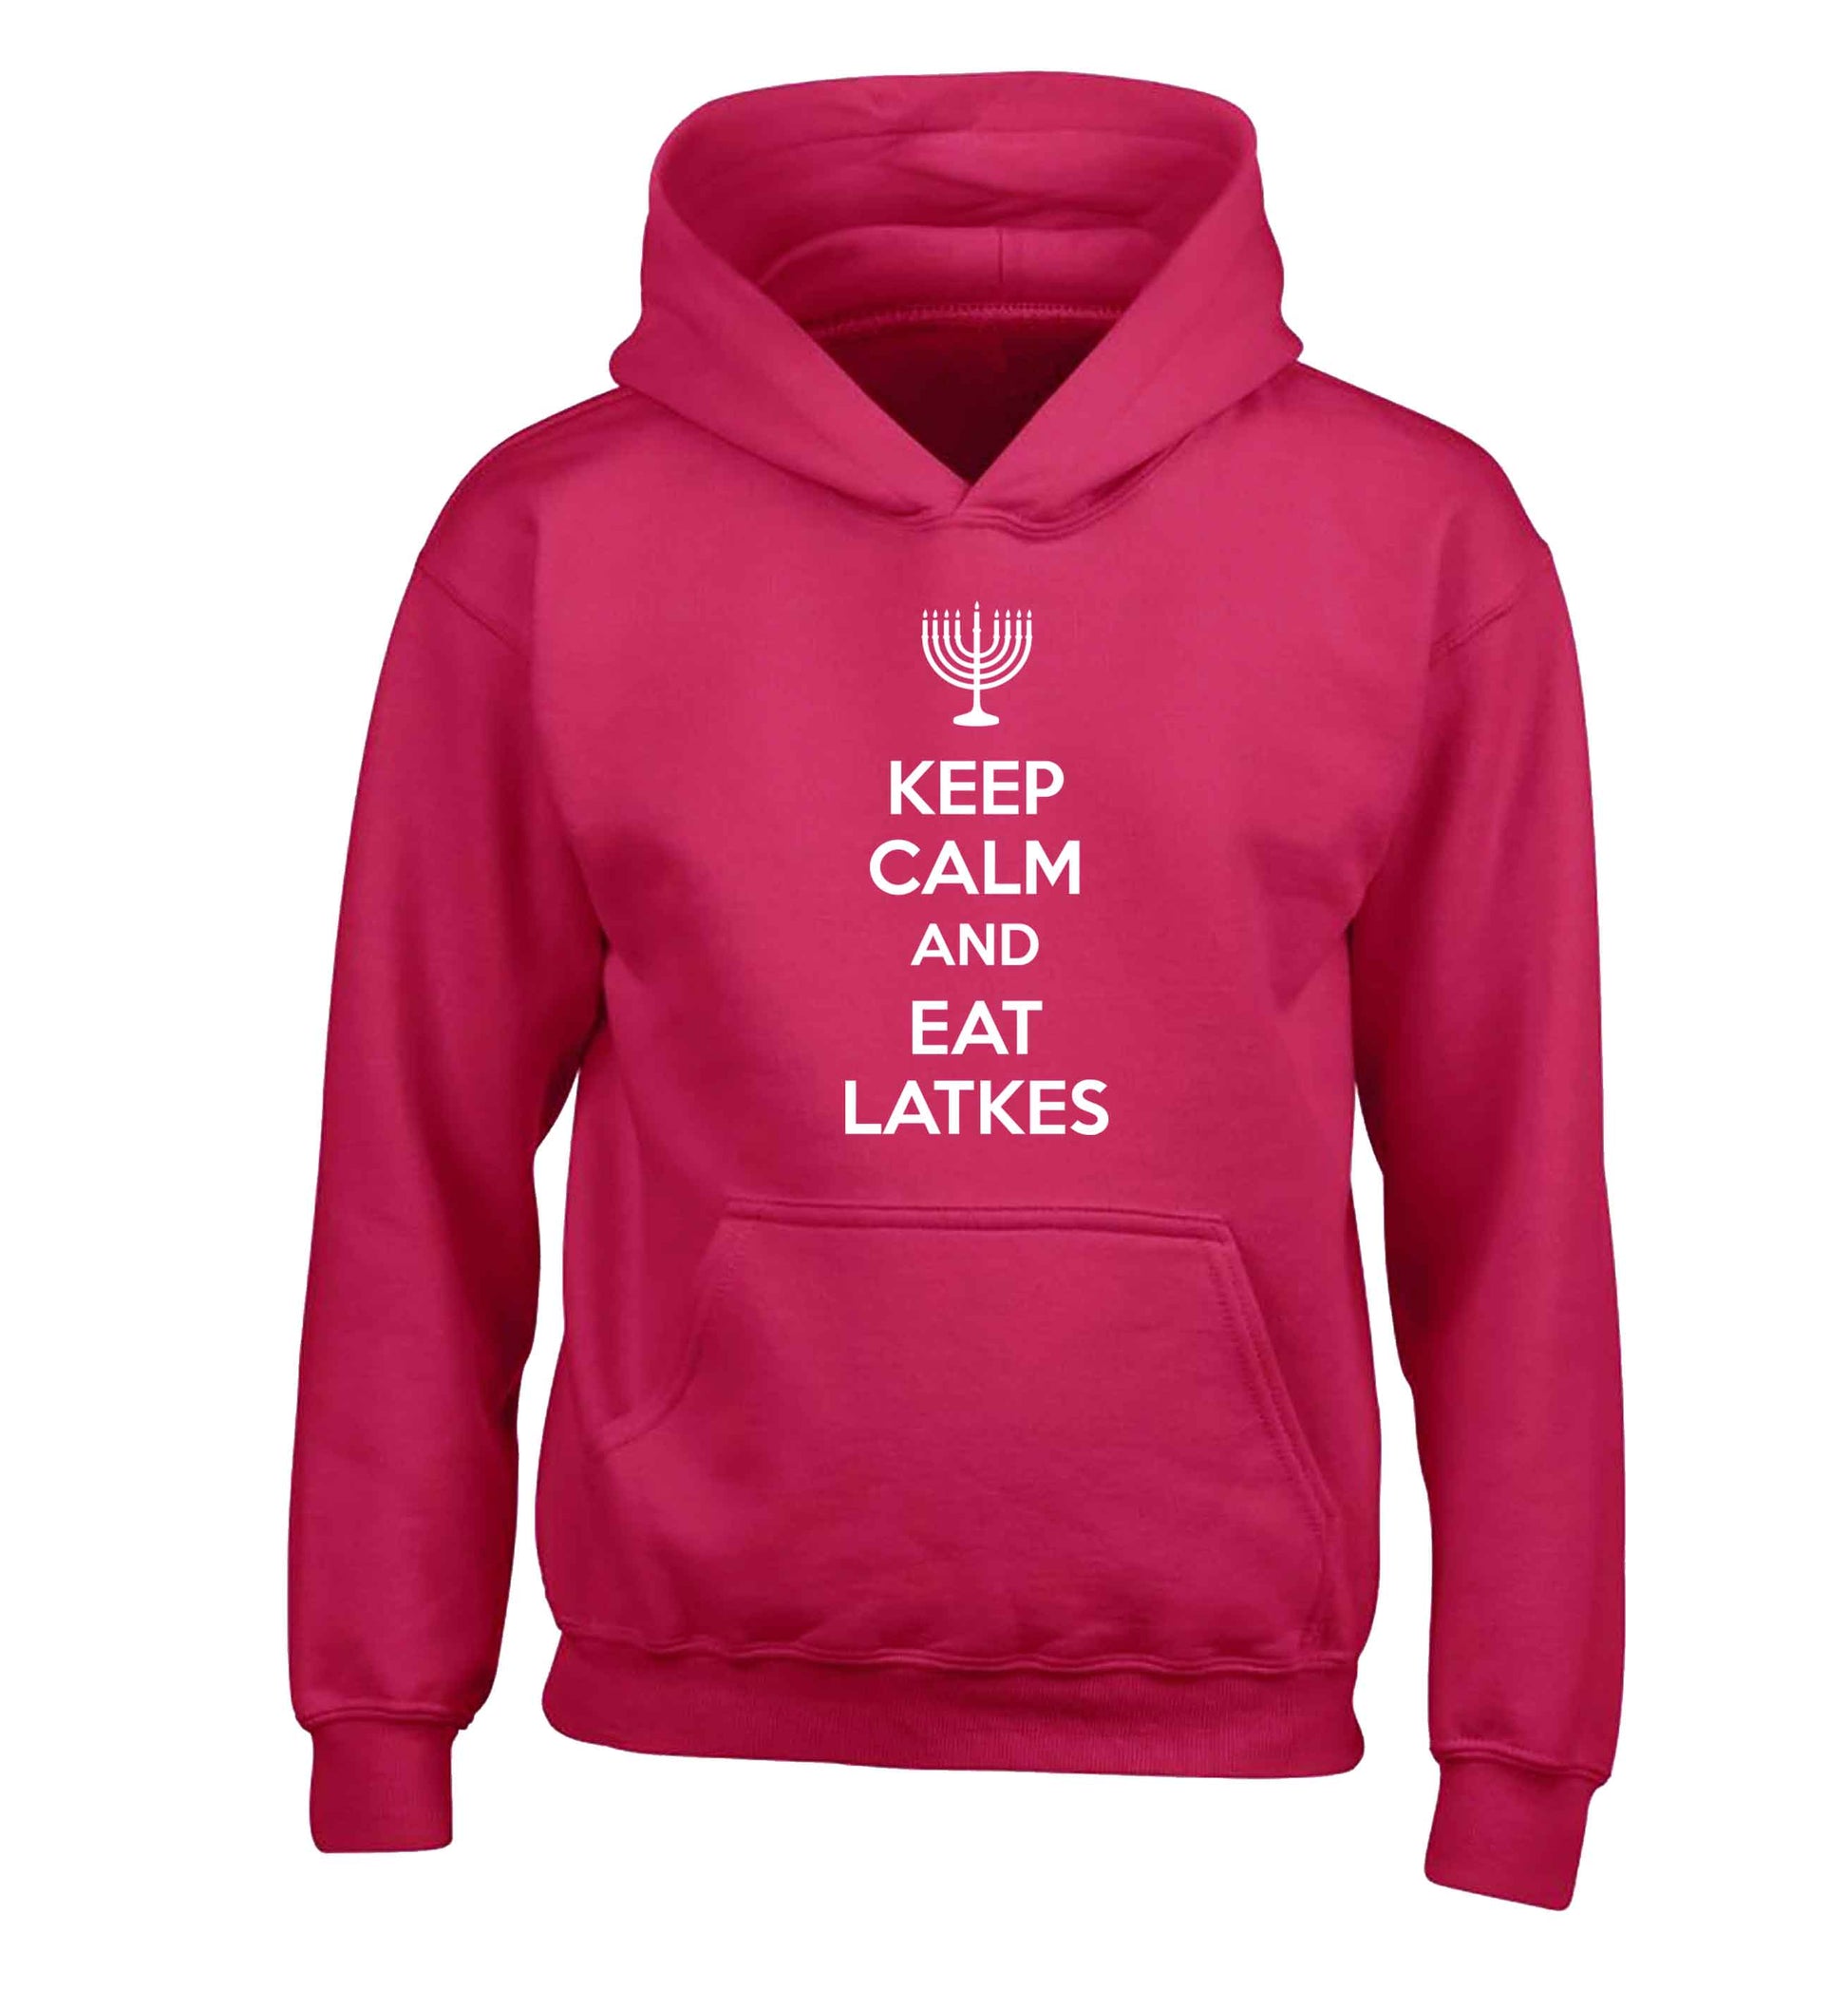 Keep calm and eat latkes children's pink hoodie 12-13 Years